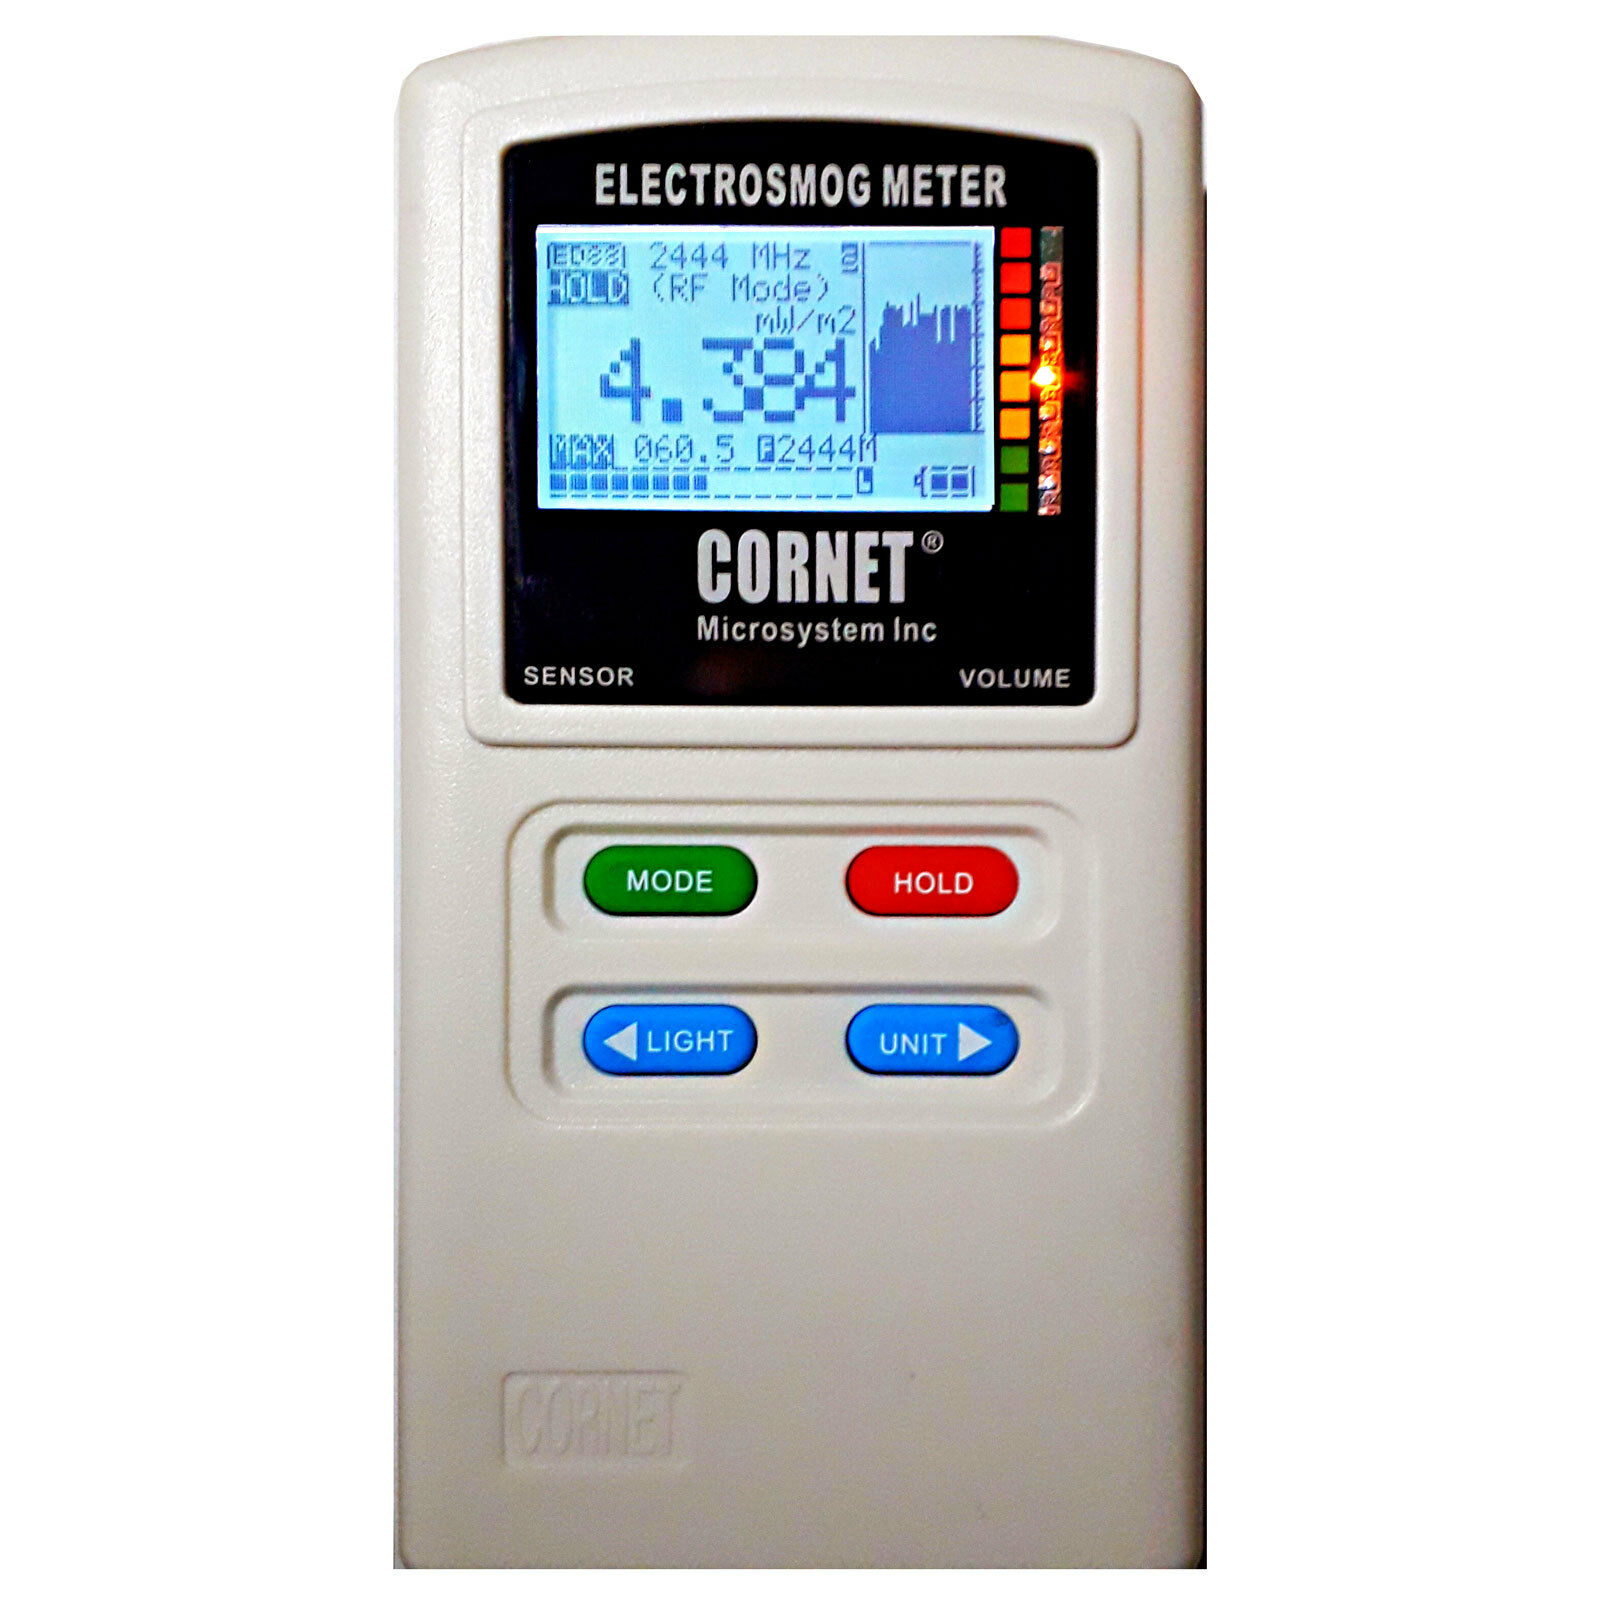 Cornet Ed88t Plus Tri-mode Rf Lf Emf E-field Electrosmog Gauss Meter Data Logger